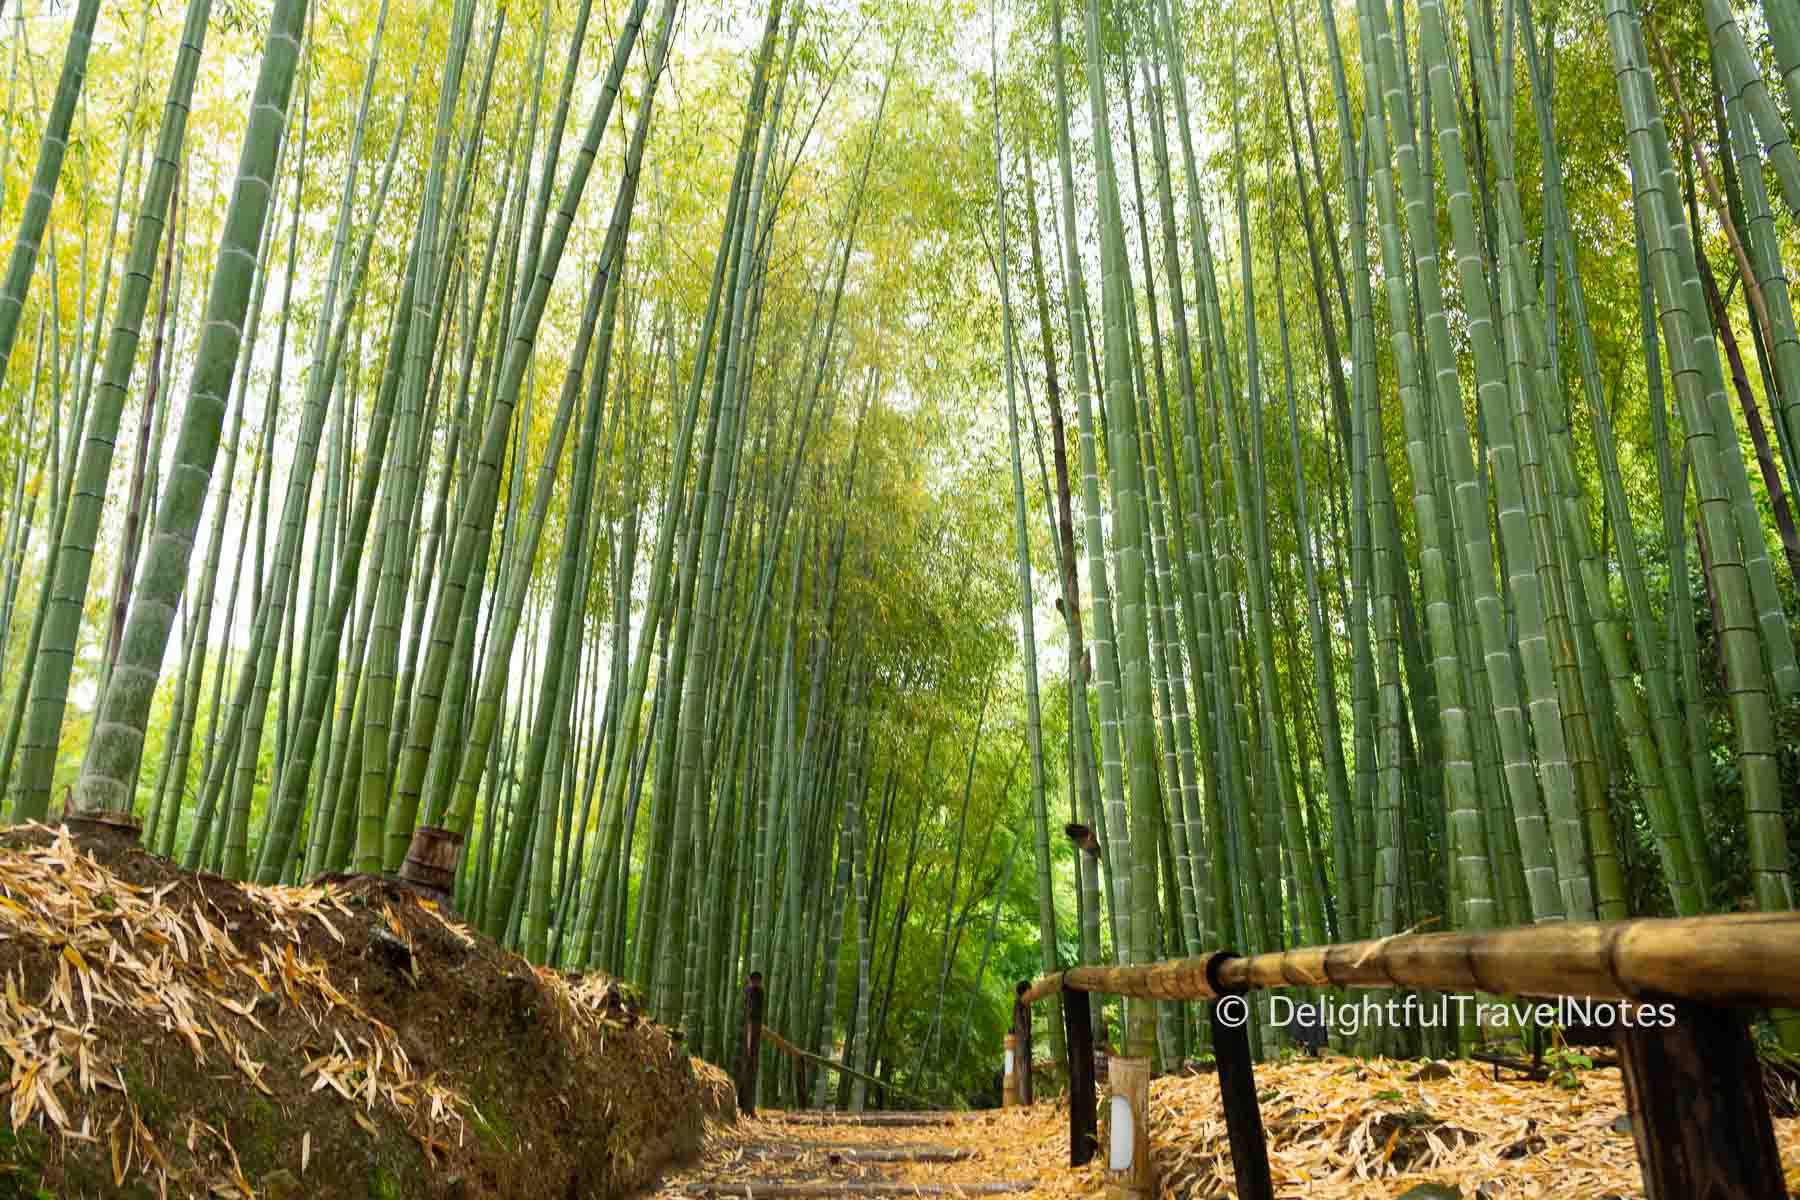 the bamboo garden at Kodai-ji temple in Kyoto with a walking path.